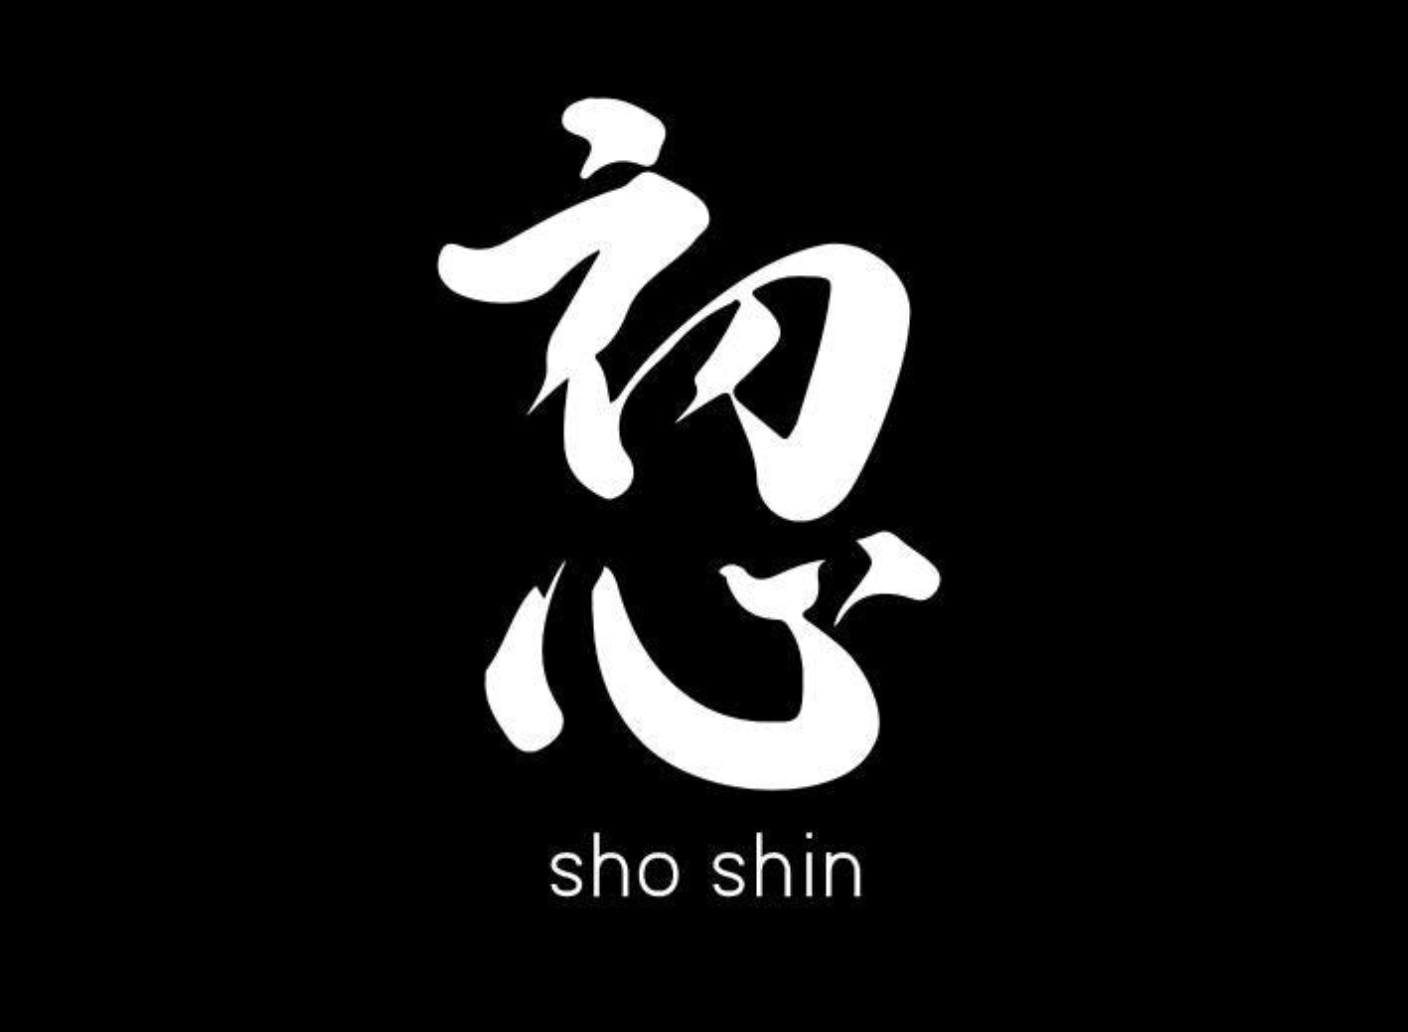 What is Shoshin?